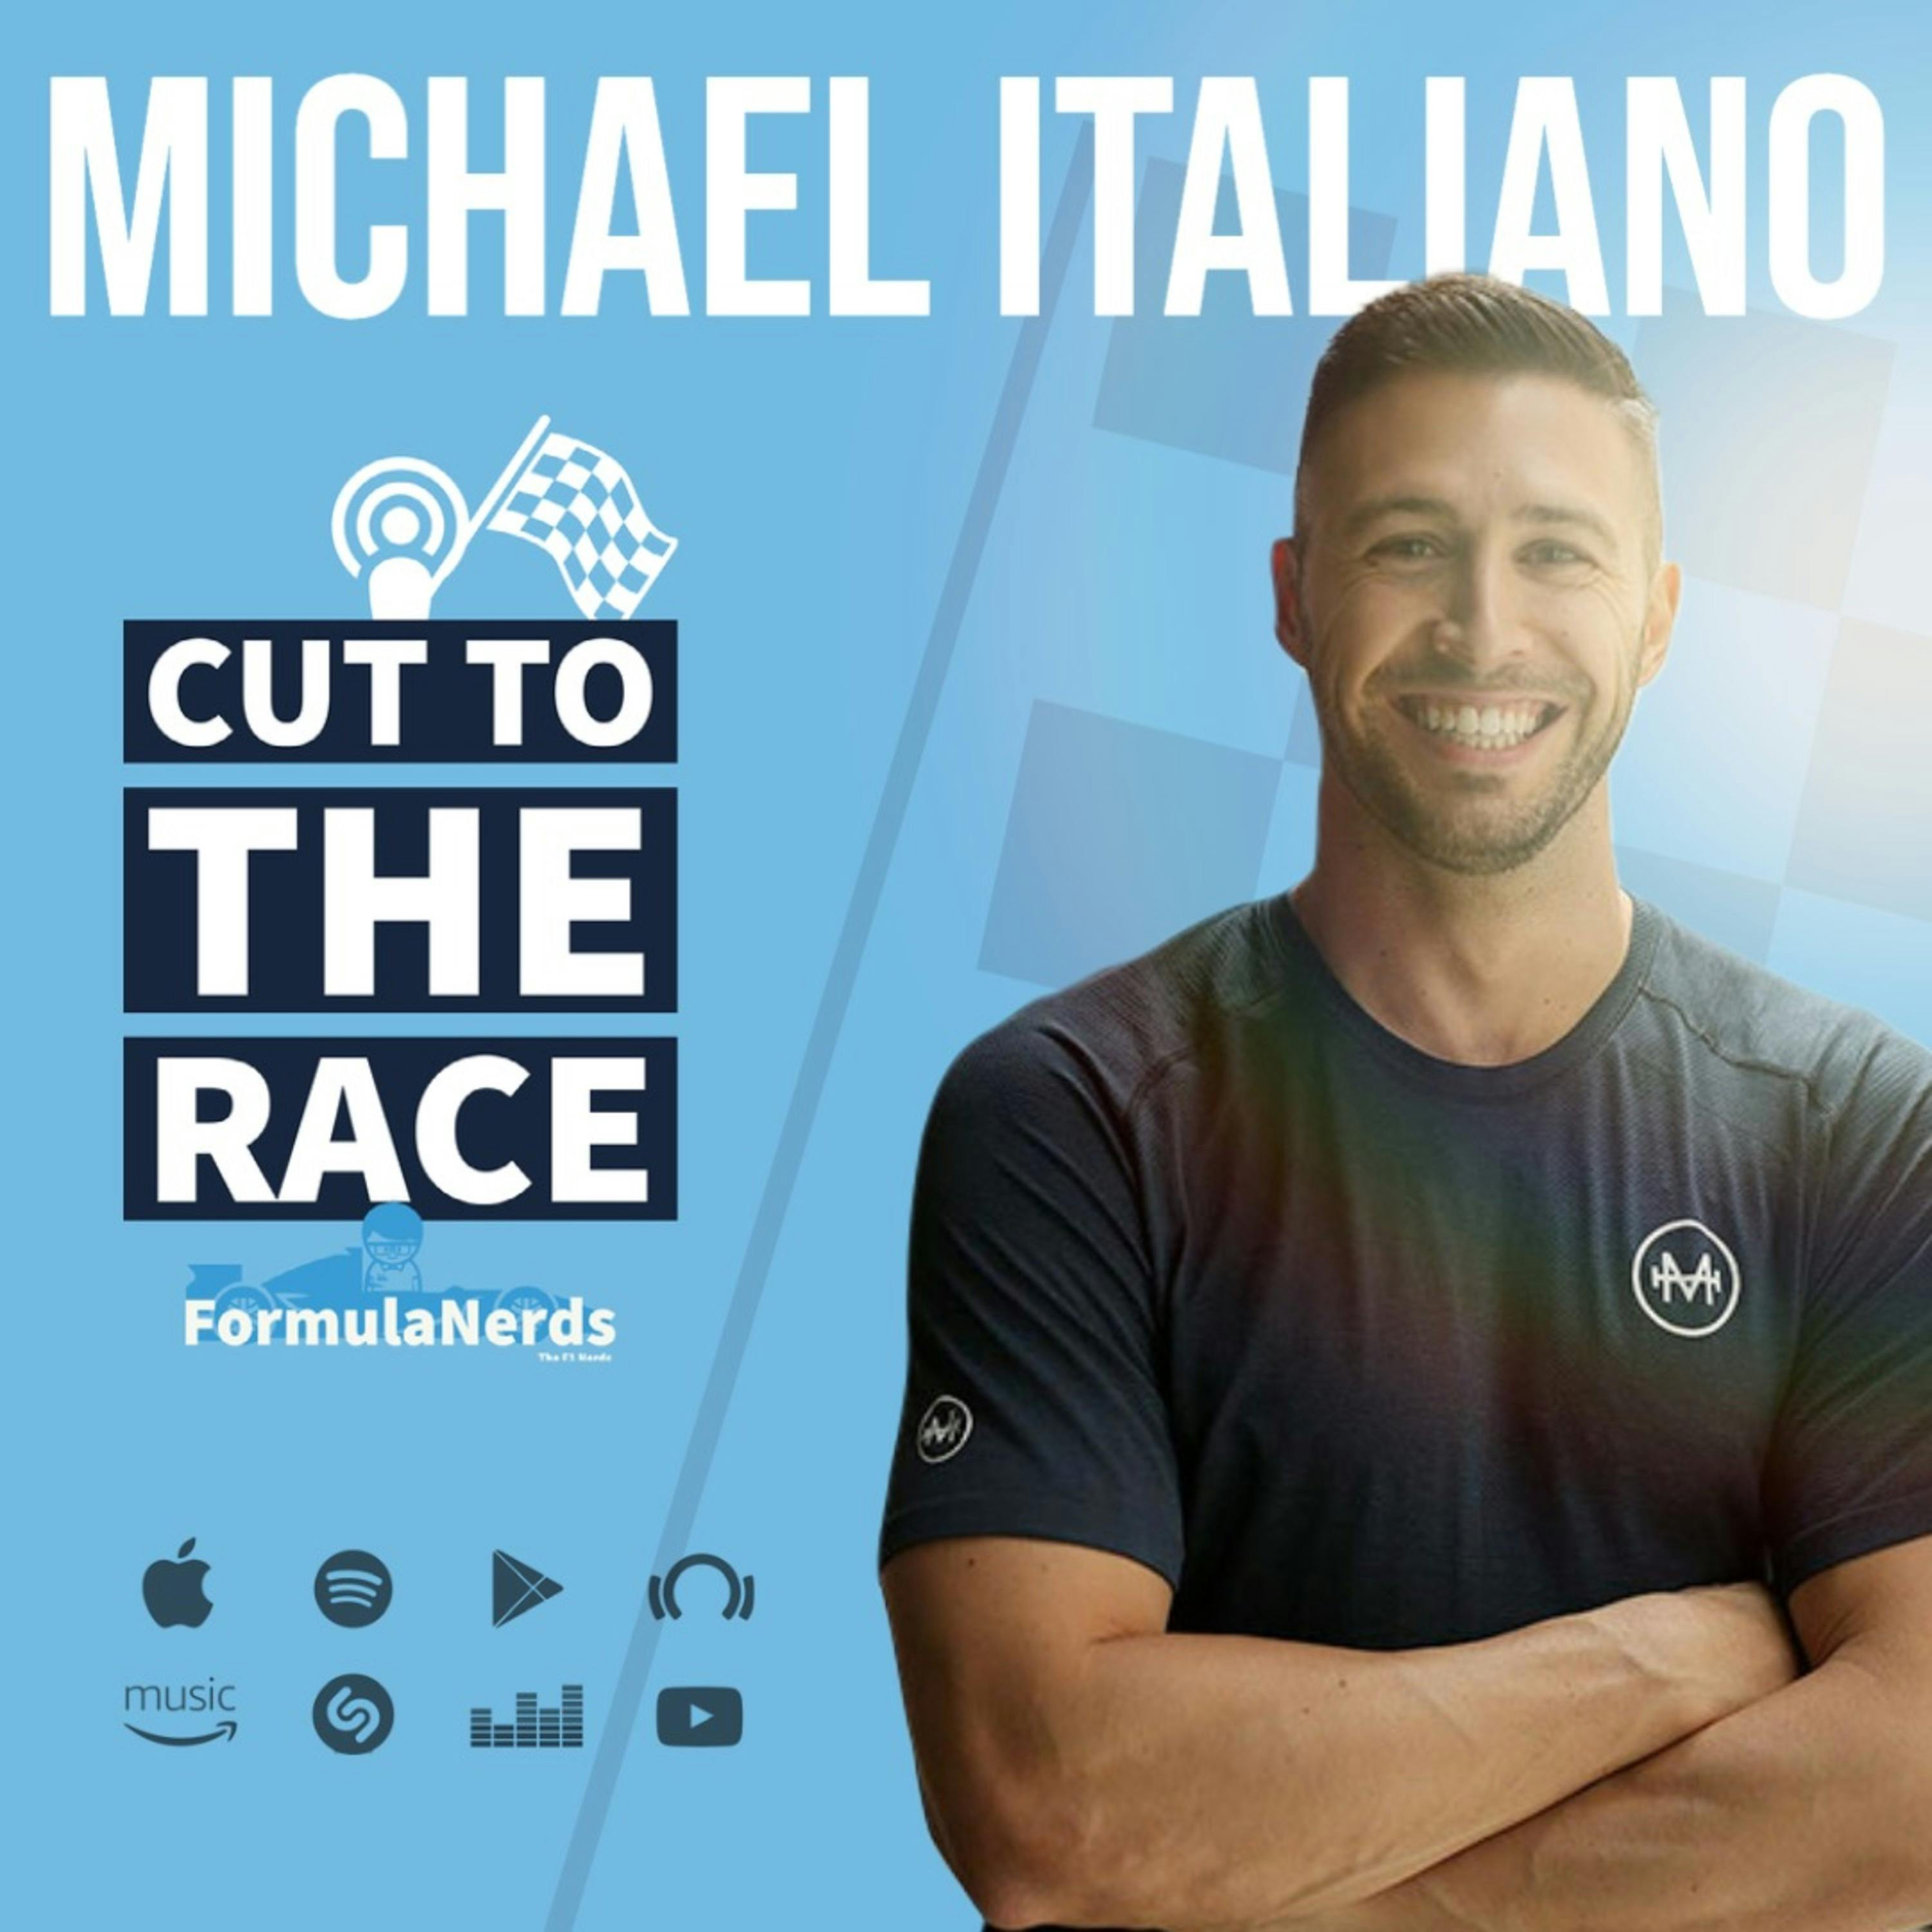 Daniel Ricciardo‘s Performance Coach - Michael Italiano [REWIND]